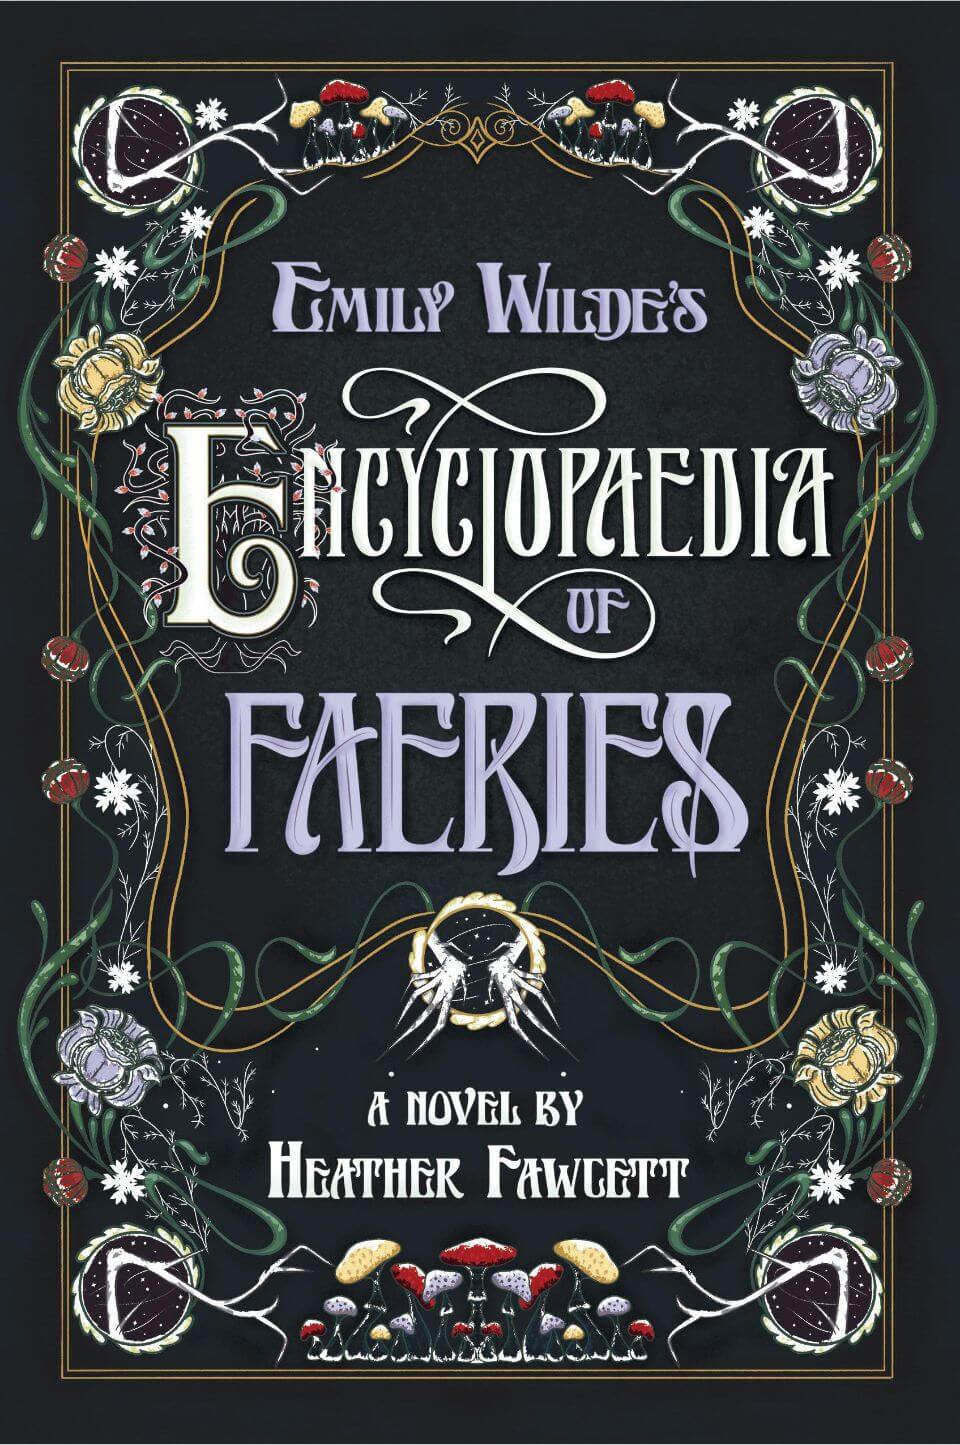 Emily Wilde's Encyclopaedia of Fairies Book Cover